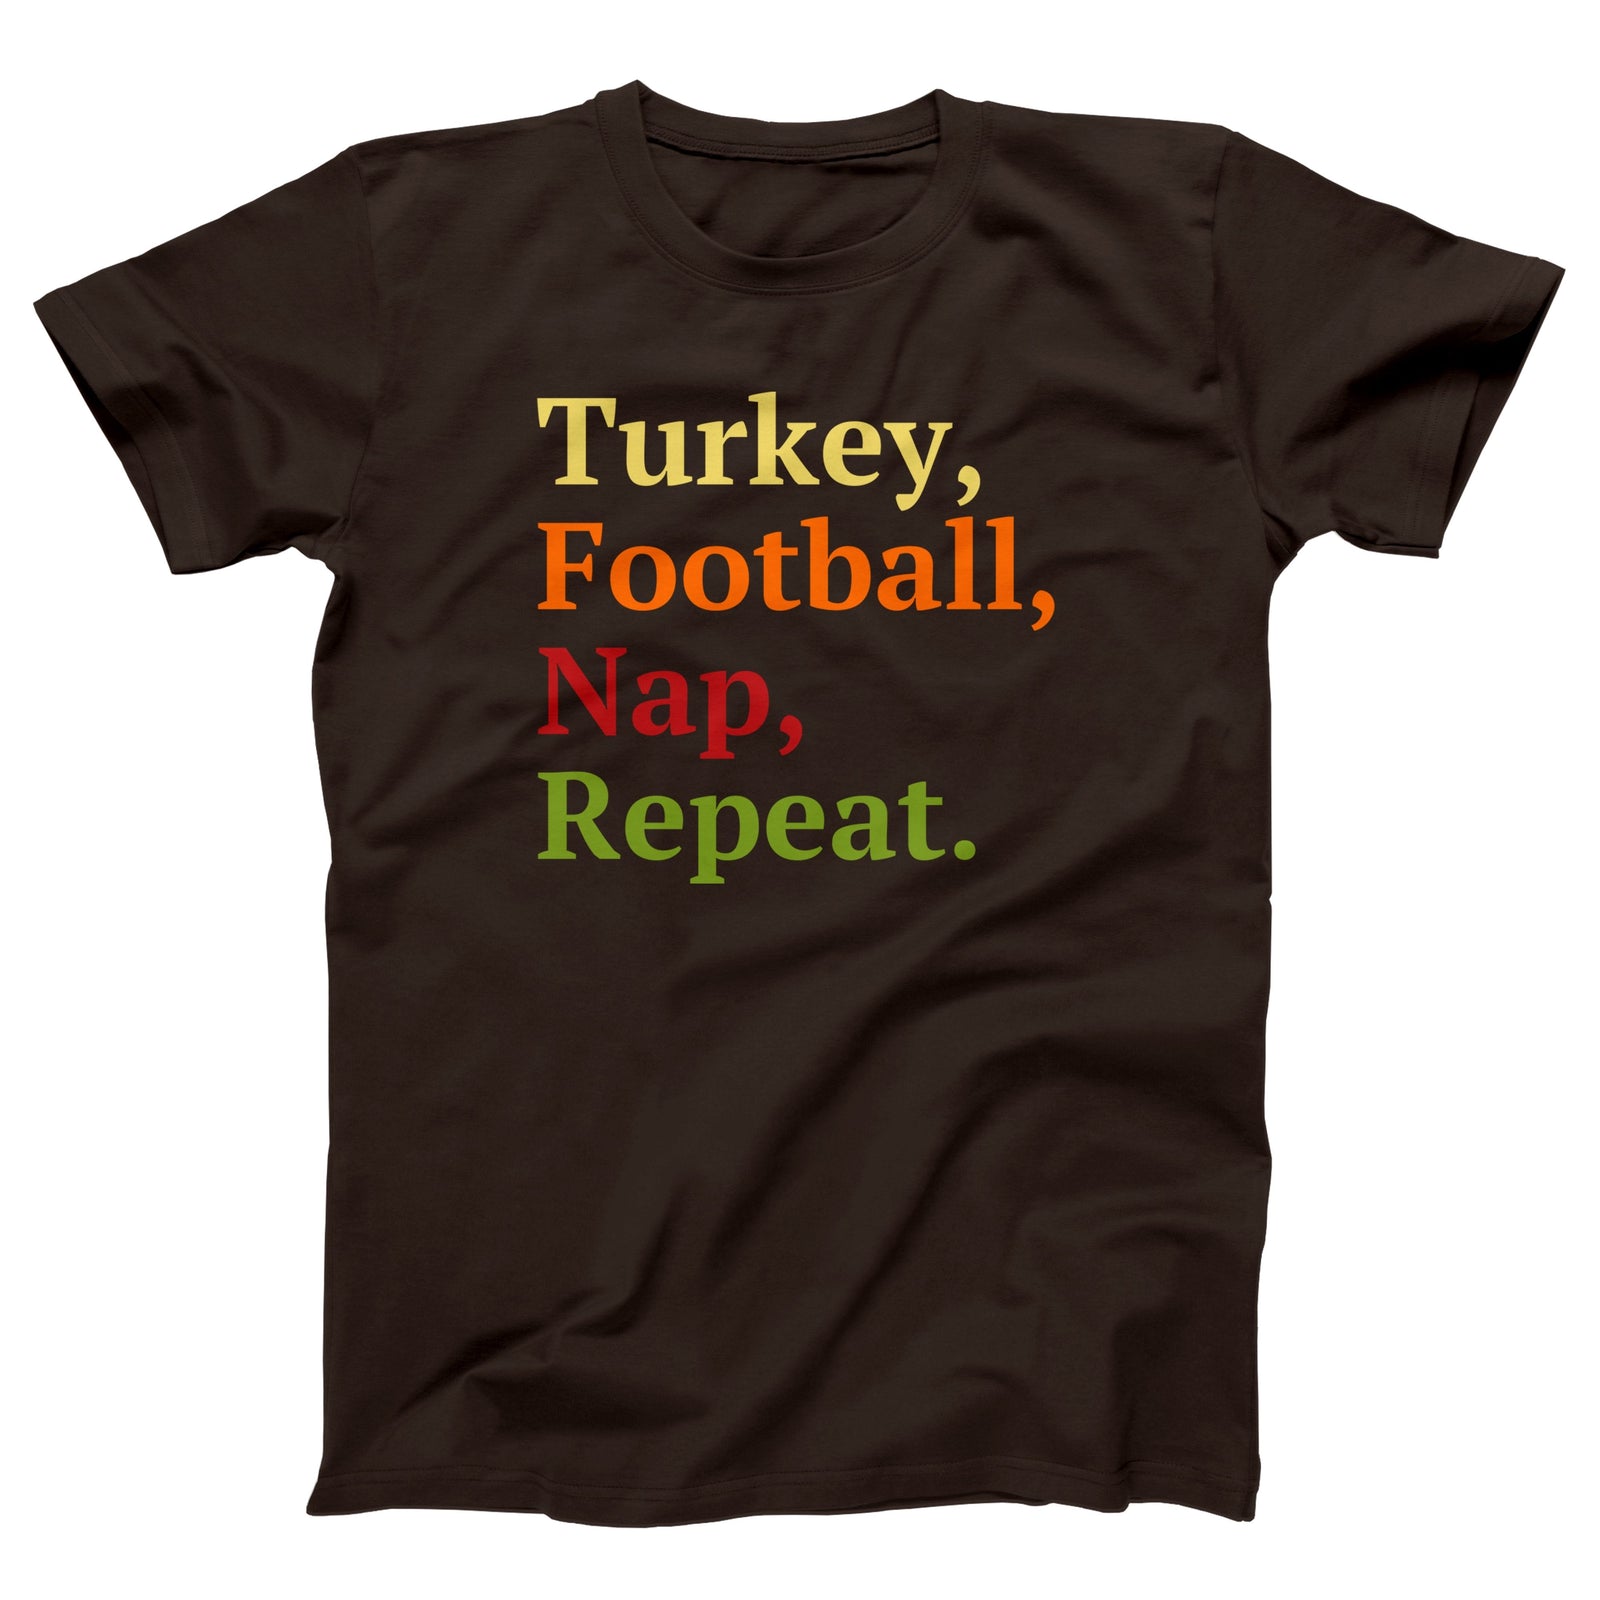 //cdn.shopify.com/s/files/1/0274/2488/2766/products/turkey-football-nap-repeat-adult-unisex-t-shirt-315906_5000x.jpg?v=1675243228 5000w,
    //cdn.shopify.com/s/files/1/0274/2488/2766/products/turkey-football-nap-repeat-adult-unisex-t-shirt-315906_4500x.jpg?v=1675243228 4500w,
    //cdn.shopify.com/s/files/1/0274/2488/2766/products/turkey-football-nap-repeat-adult-unisex-t-shirt-315906_4000x.jpg?v=1675243228 4000w,
    //cdn.shopify.com/s/files/1/0274/2488/2766/products/turkey-football-nap-repeat-adult-unisex-t-shirt-315906_3500x.jpg?v=1675243228 3500w,
    //cdn.shopify.com/s/files/1/0274/2488/2766/products/turkey-football-nap-repeat-adult-unisex-t-shirt-315906_3000x.jpg?v=1675243228 3000w,
    //cdn.shopify.com/s/files/1/0274/2488/2766/products/turkey-football-nap-repeat-adult-unisex-t-shirt-315906_2500x.jpg?v=1675243228 2500w,
    //cdn.shopify.com/s/files/1/0274/2488/2766/products/turkey-football-nap-repeat-adult-unisex-t-shirt-315906_2000x.jpg?v=1675243228 2000w,
    //cdn.shopify.com/s/files/1/0274/2488/2766/products/turkey-football-nap-repeat-adult-unisex-t-shirt-315906_1800x.jpg?v=1675243228 1800w,
    //cdn.shopify.com/s/files/1/0274/2488/2766/products/turkey-football-nap-repeat-adult-unisex-t-shirt-315906_1600x.jpg?v=1675243228 1600w,
    //cdn.shopify.com/s/files/1/0274/2488/2766/products/turkey-football-nap-repeat-adult-unisex-t-shirt-315906_1400x.jpg?v=1675243228 1400w,
    //cdn.shopify.com/s/files/1/0274/2488/2766/products/turkey-football-nap-repeat-adult-unisex-t-shirt-315906_1200x.jpg?v=1675243228 1200w,
    //cdn.shopify.com/s/files/1/0274/2488/2766/products/turkey-football-nap-repeat-adult-unisex-t-shirt-315906_1000x.jpg?v=1675243228 1000w,
    //cdn.shopify.com/s/files/1/0274/2488/2766/products/turkey-football-nap-repeat-adult-unisex-t-shirt-315906_800x.jpg?v=1675243228 800w,
    //cdn.shopify.com/s/files/1/0274/2488/2766/products/turkey-football-nap-repeat-adult-unisex-t-shirt-315906_600x.jpg?v=1675243228 600w,
    //cdn.shopify.com/s/files/1/0274/2488/2766/products/turkey-football-nap-repeat-adult-unisex-t-shirt-315906_400x.jpg?v=1675243228 400w,
    //cdn.shopify.com/s/files/1/0274/2488/2766/products/turkey-football-nap-repeat-adult-unisex-t-shirt-315906_200x.jpg?v=1675243228 200w